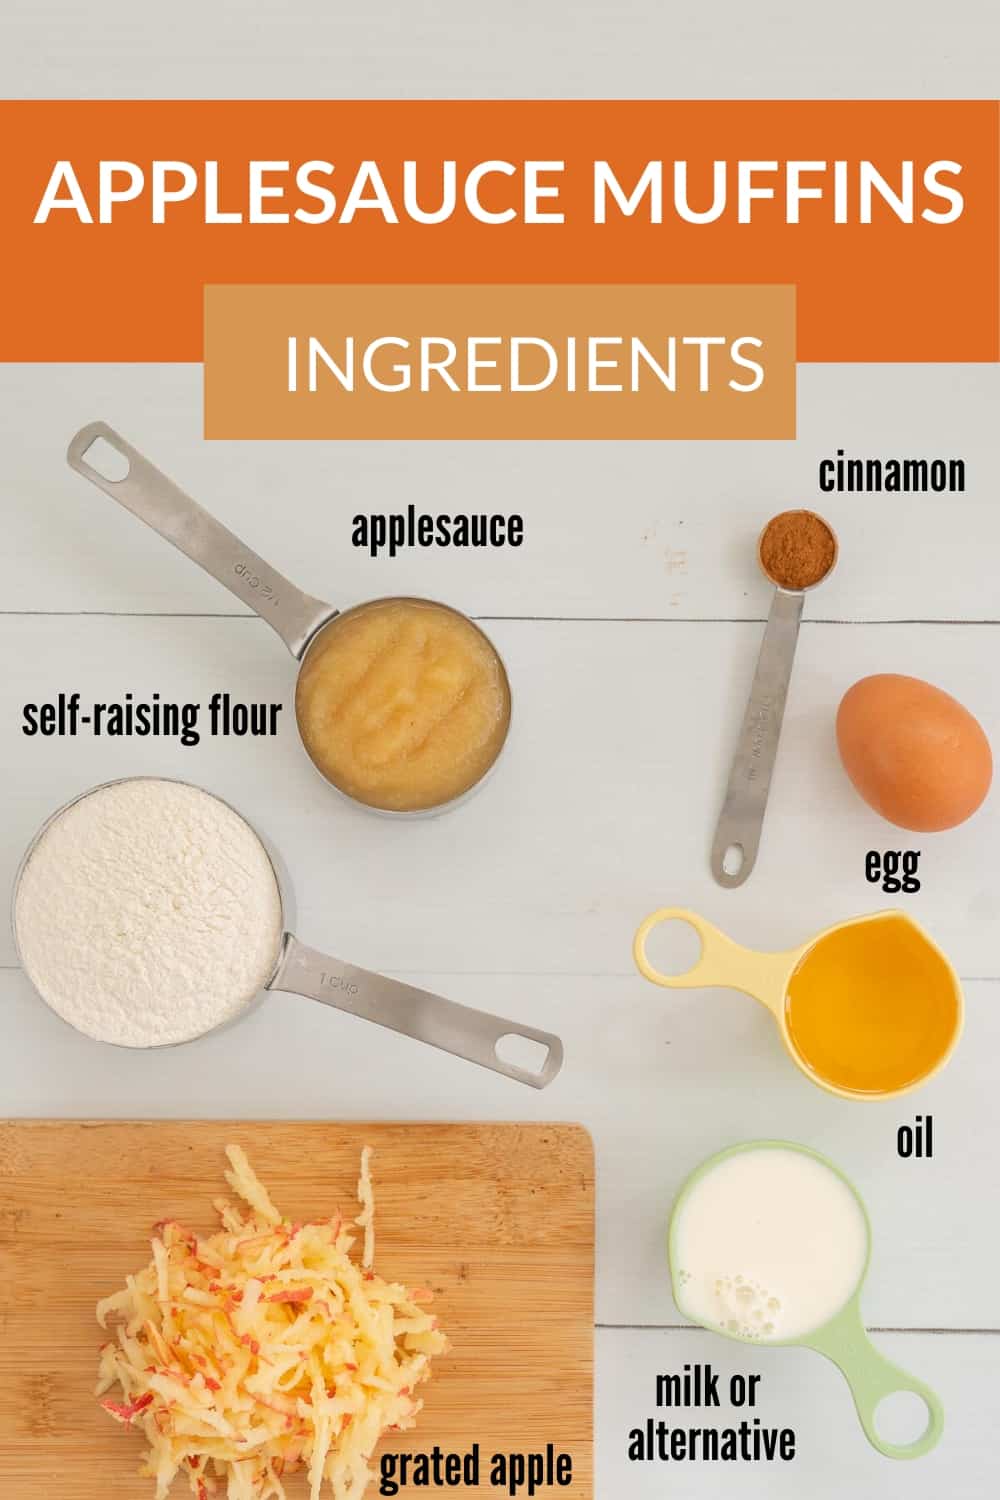 The ingredients for the muffins, applesauce, self-raising flour, milk,  oil, egg, cinnamon, grated apple